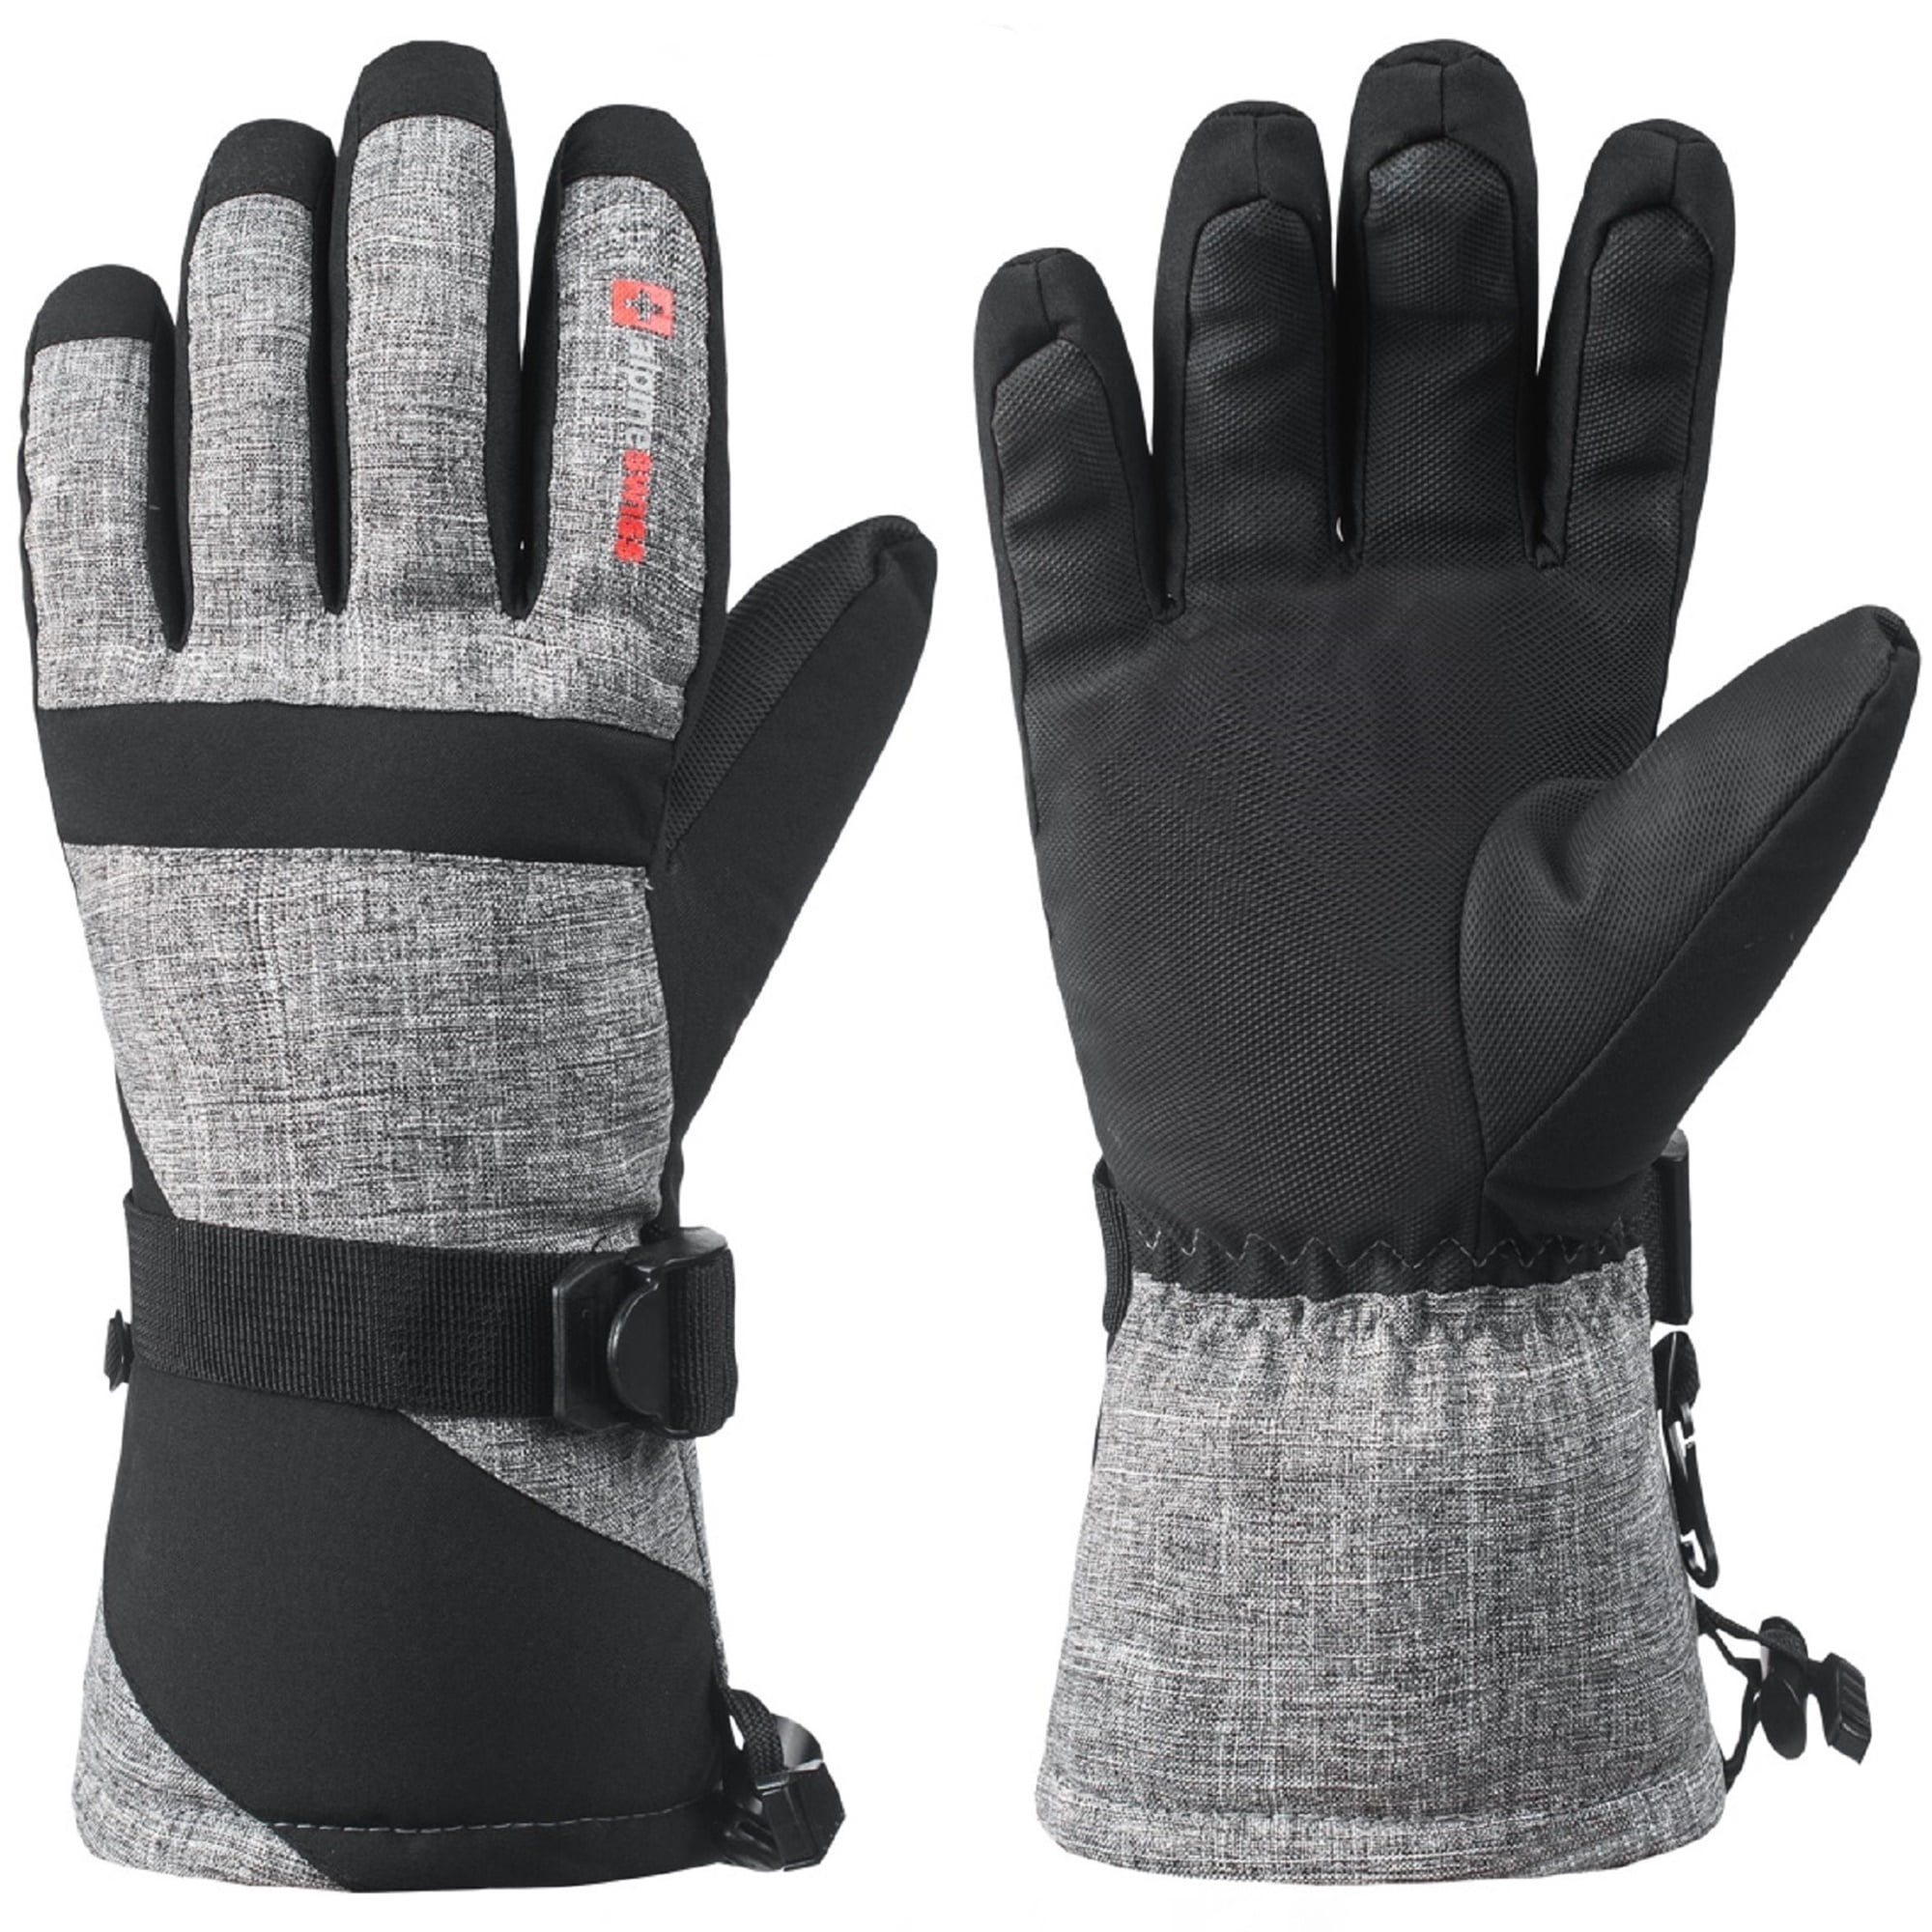 Global Park Winter Gloves Men Women Snow Touchscreen Waterproof Insulated for Outdoor Ski